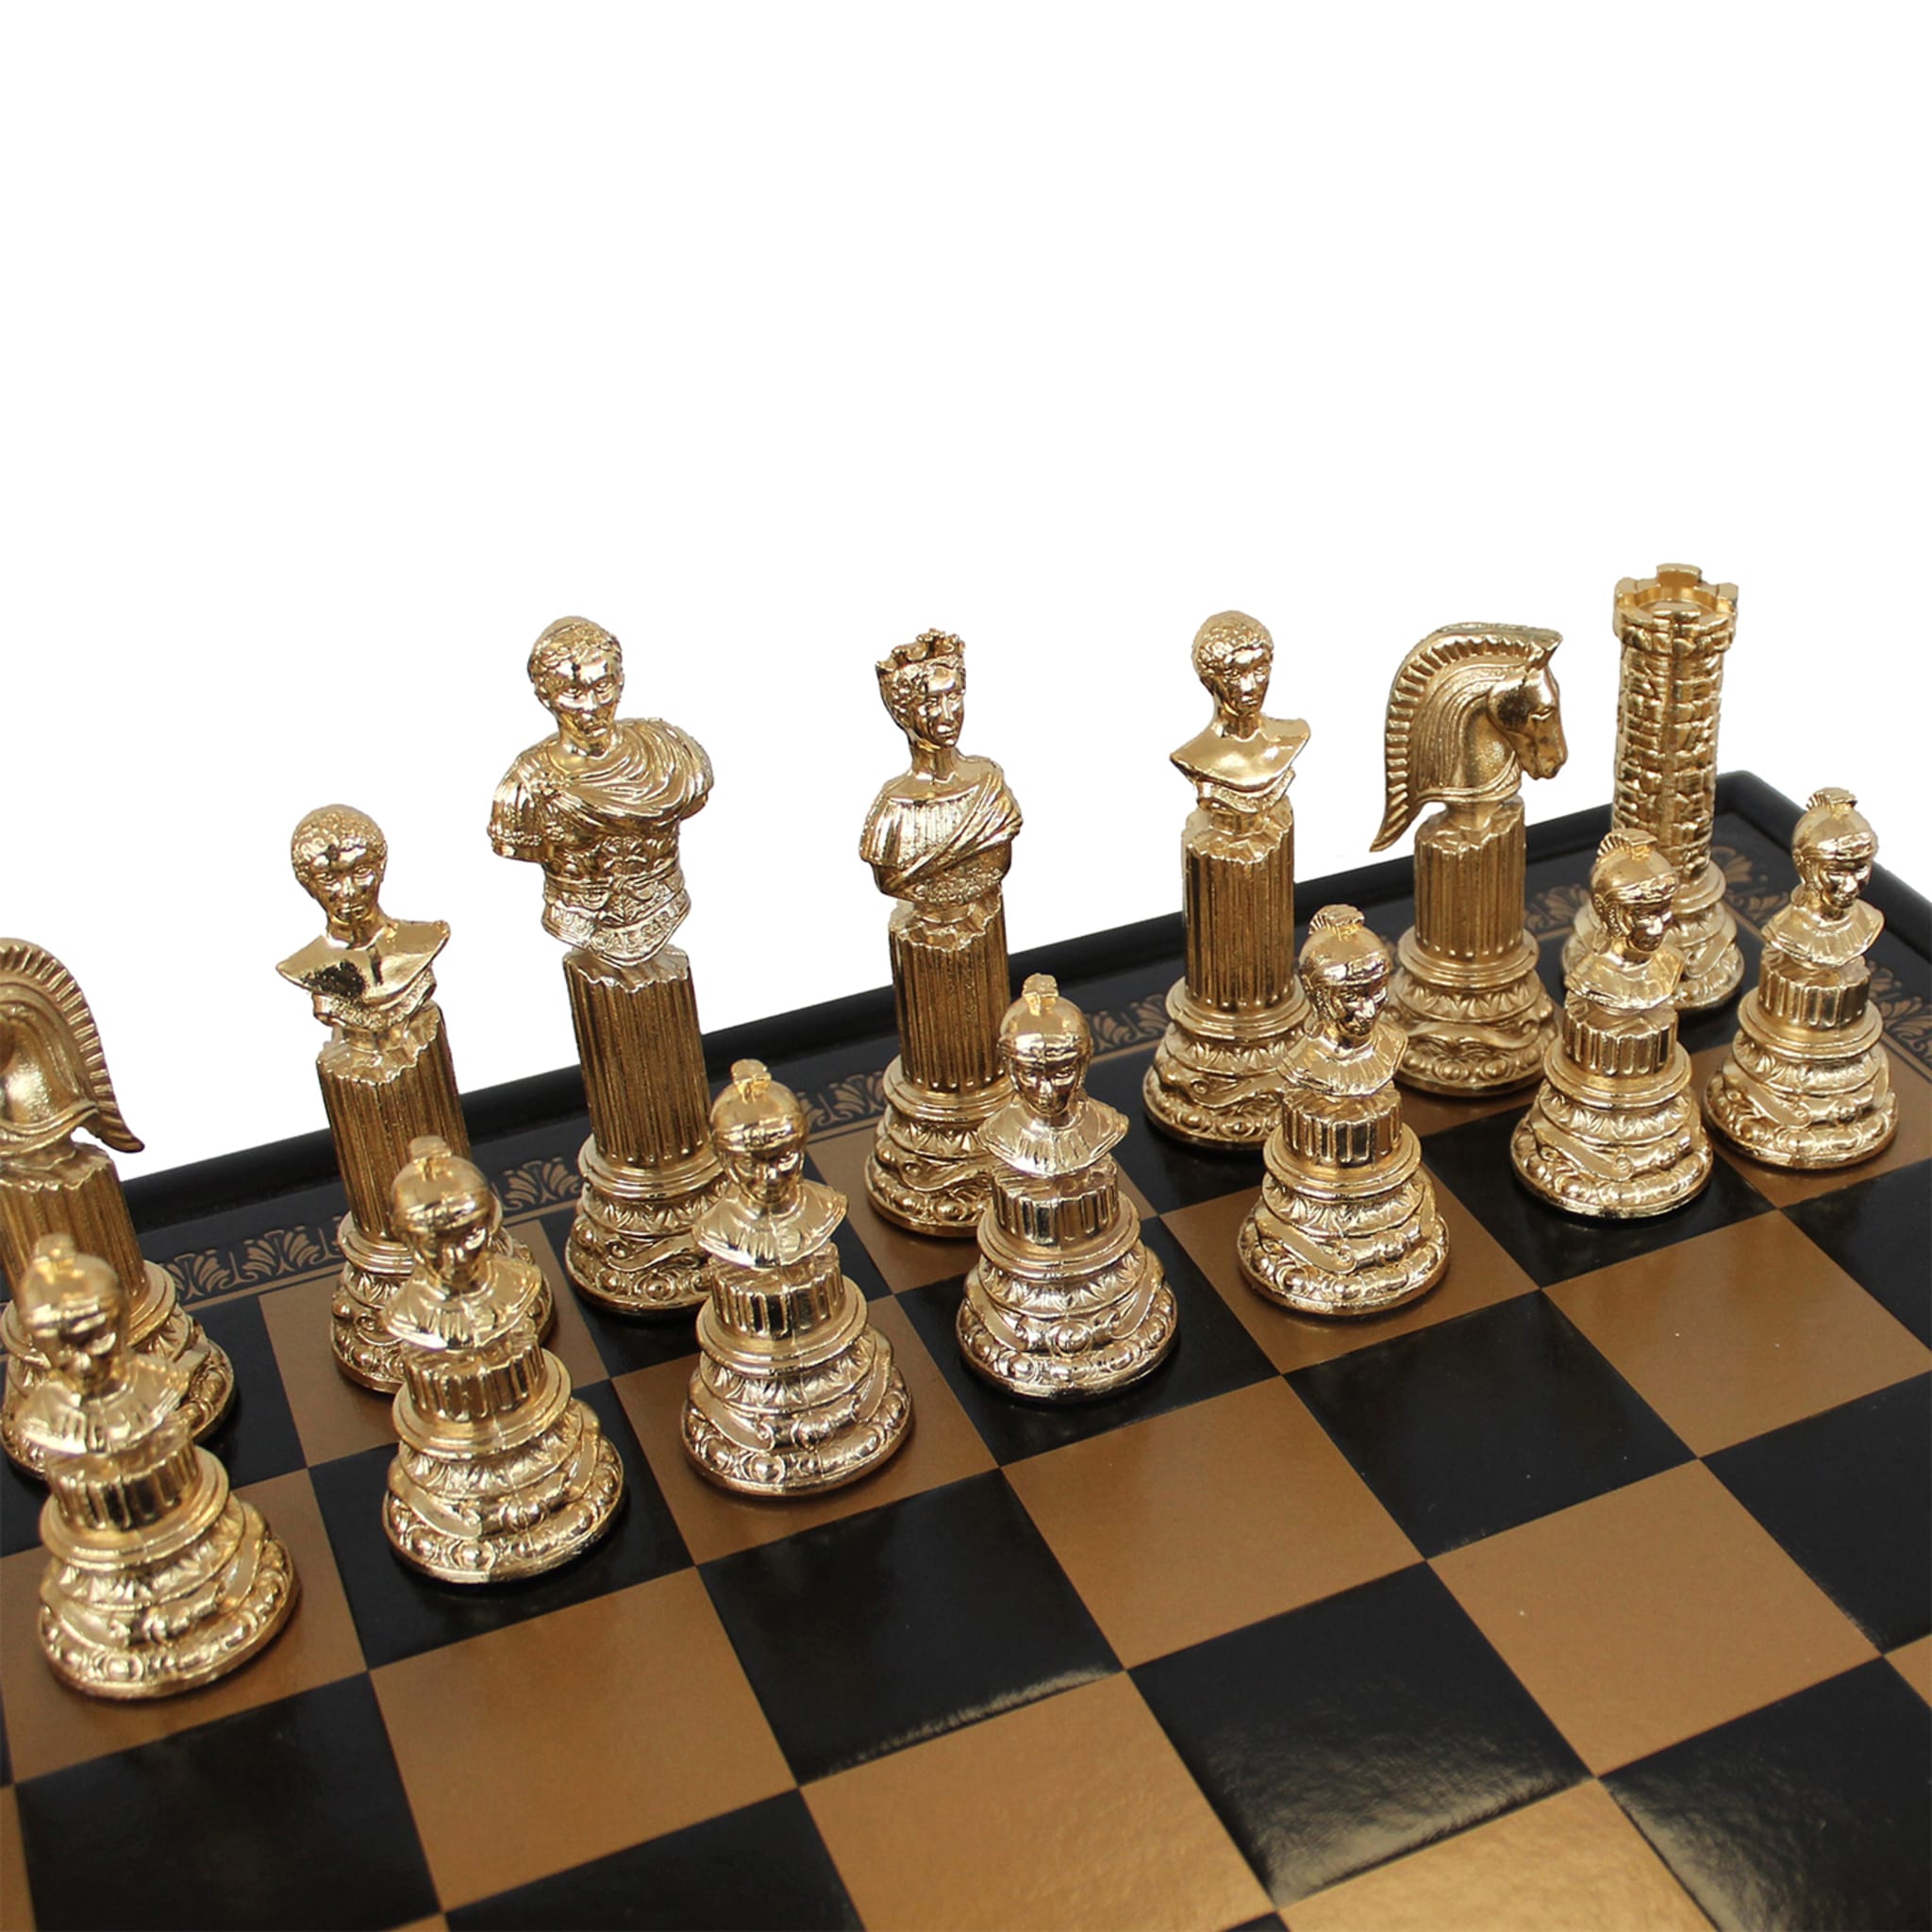 Impero Romano Chess Table - Alternative view 4